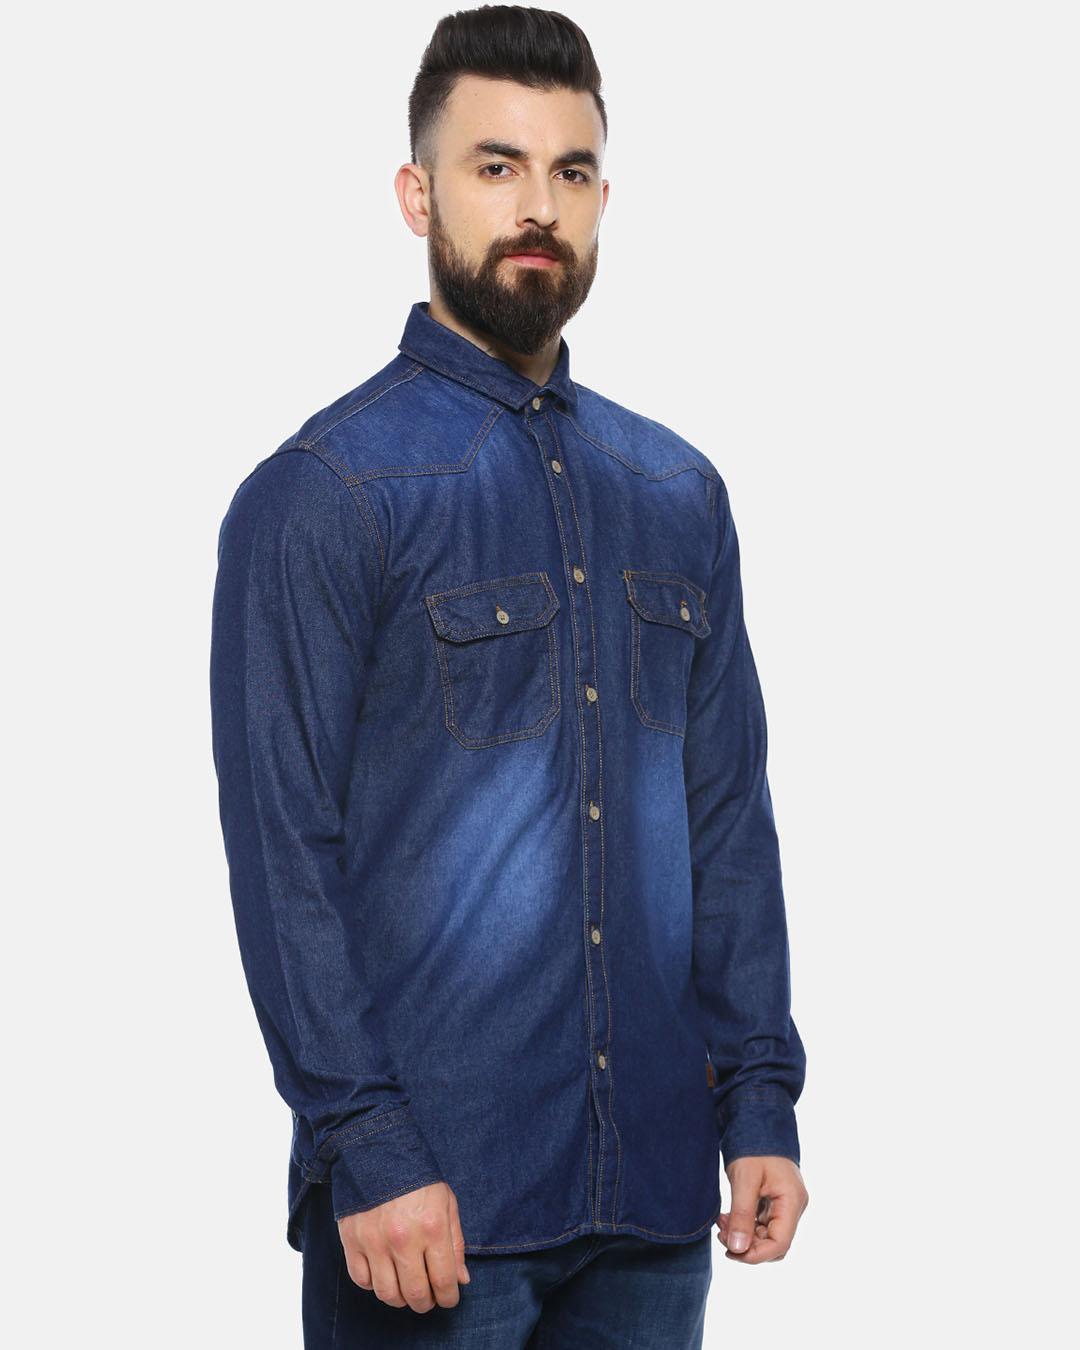 jeans men - Buy jeans men Online Starting at Just ₹318 | Meesho